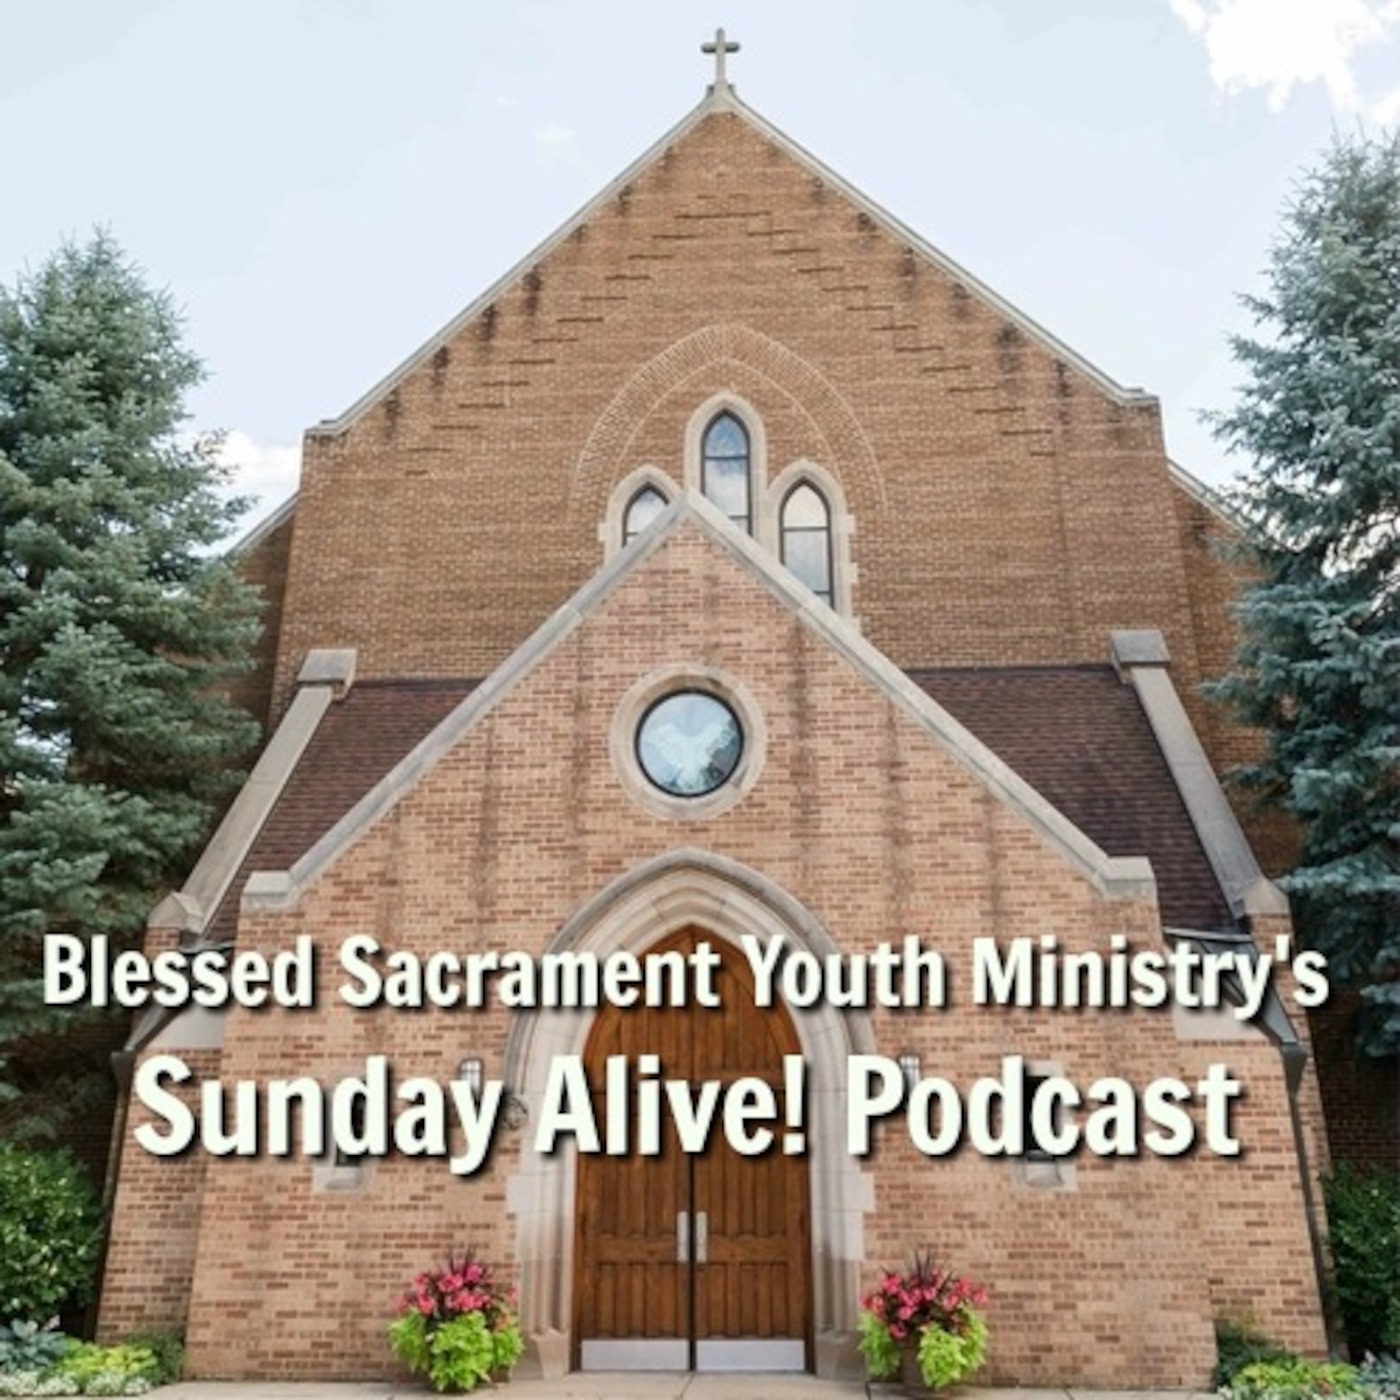 The Sunday Alive Podcast - Sunday, November 24, 2019 - the Thirty-fourth Sunday of Ordinary Time